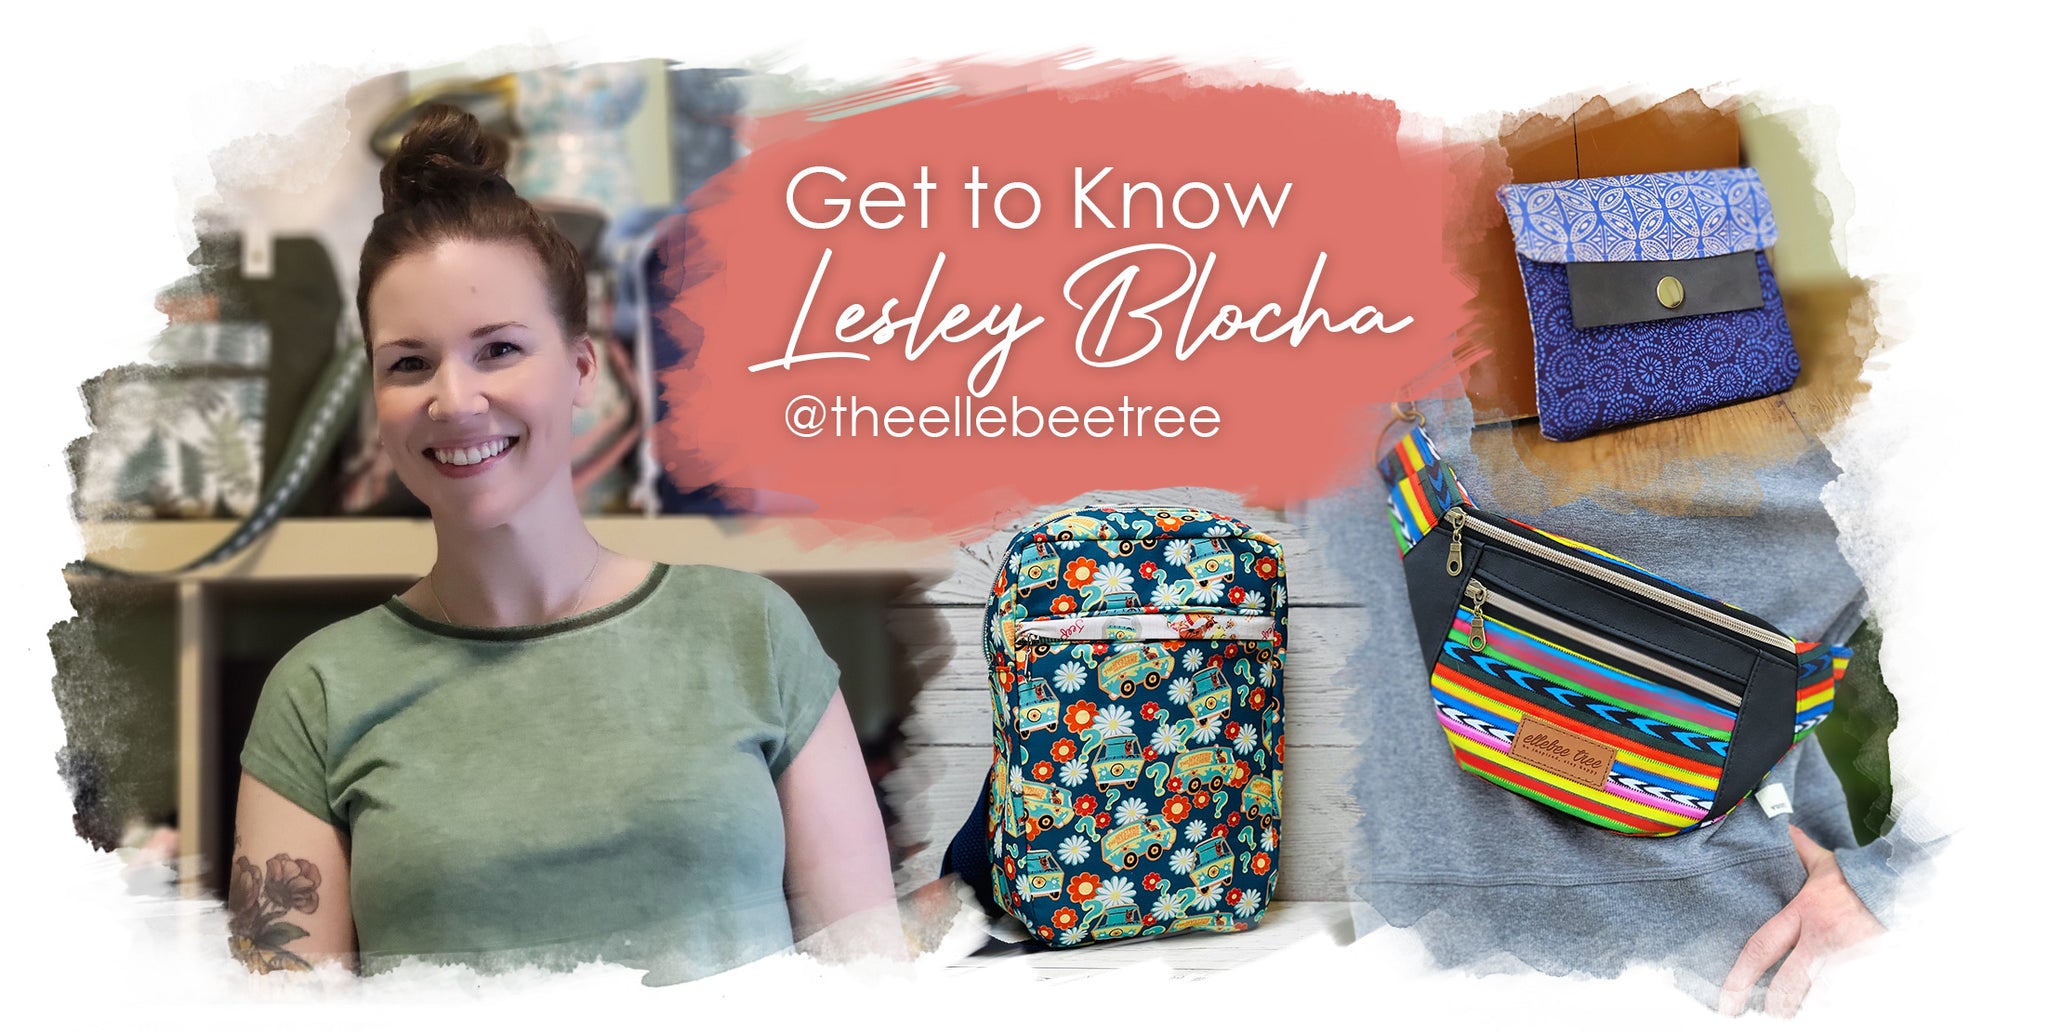 Get to Know Lesley Blocha, @theellebeetree